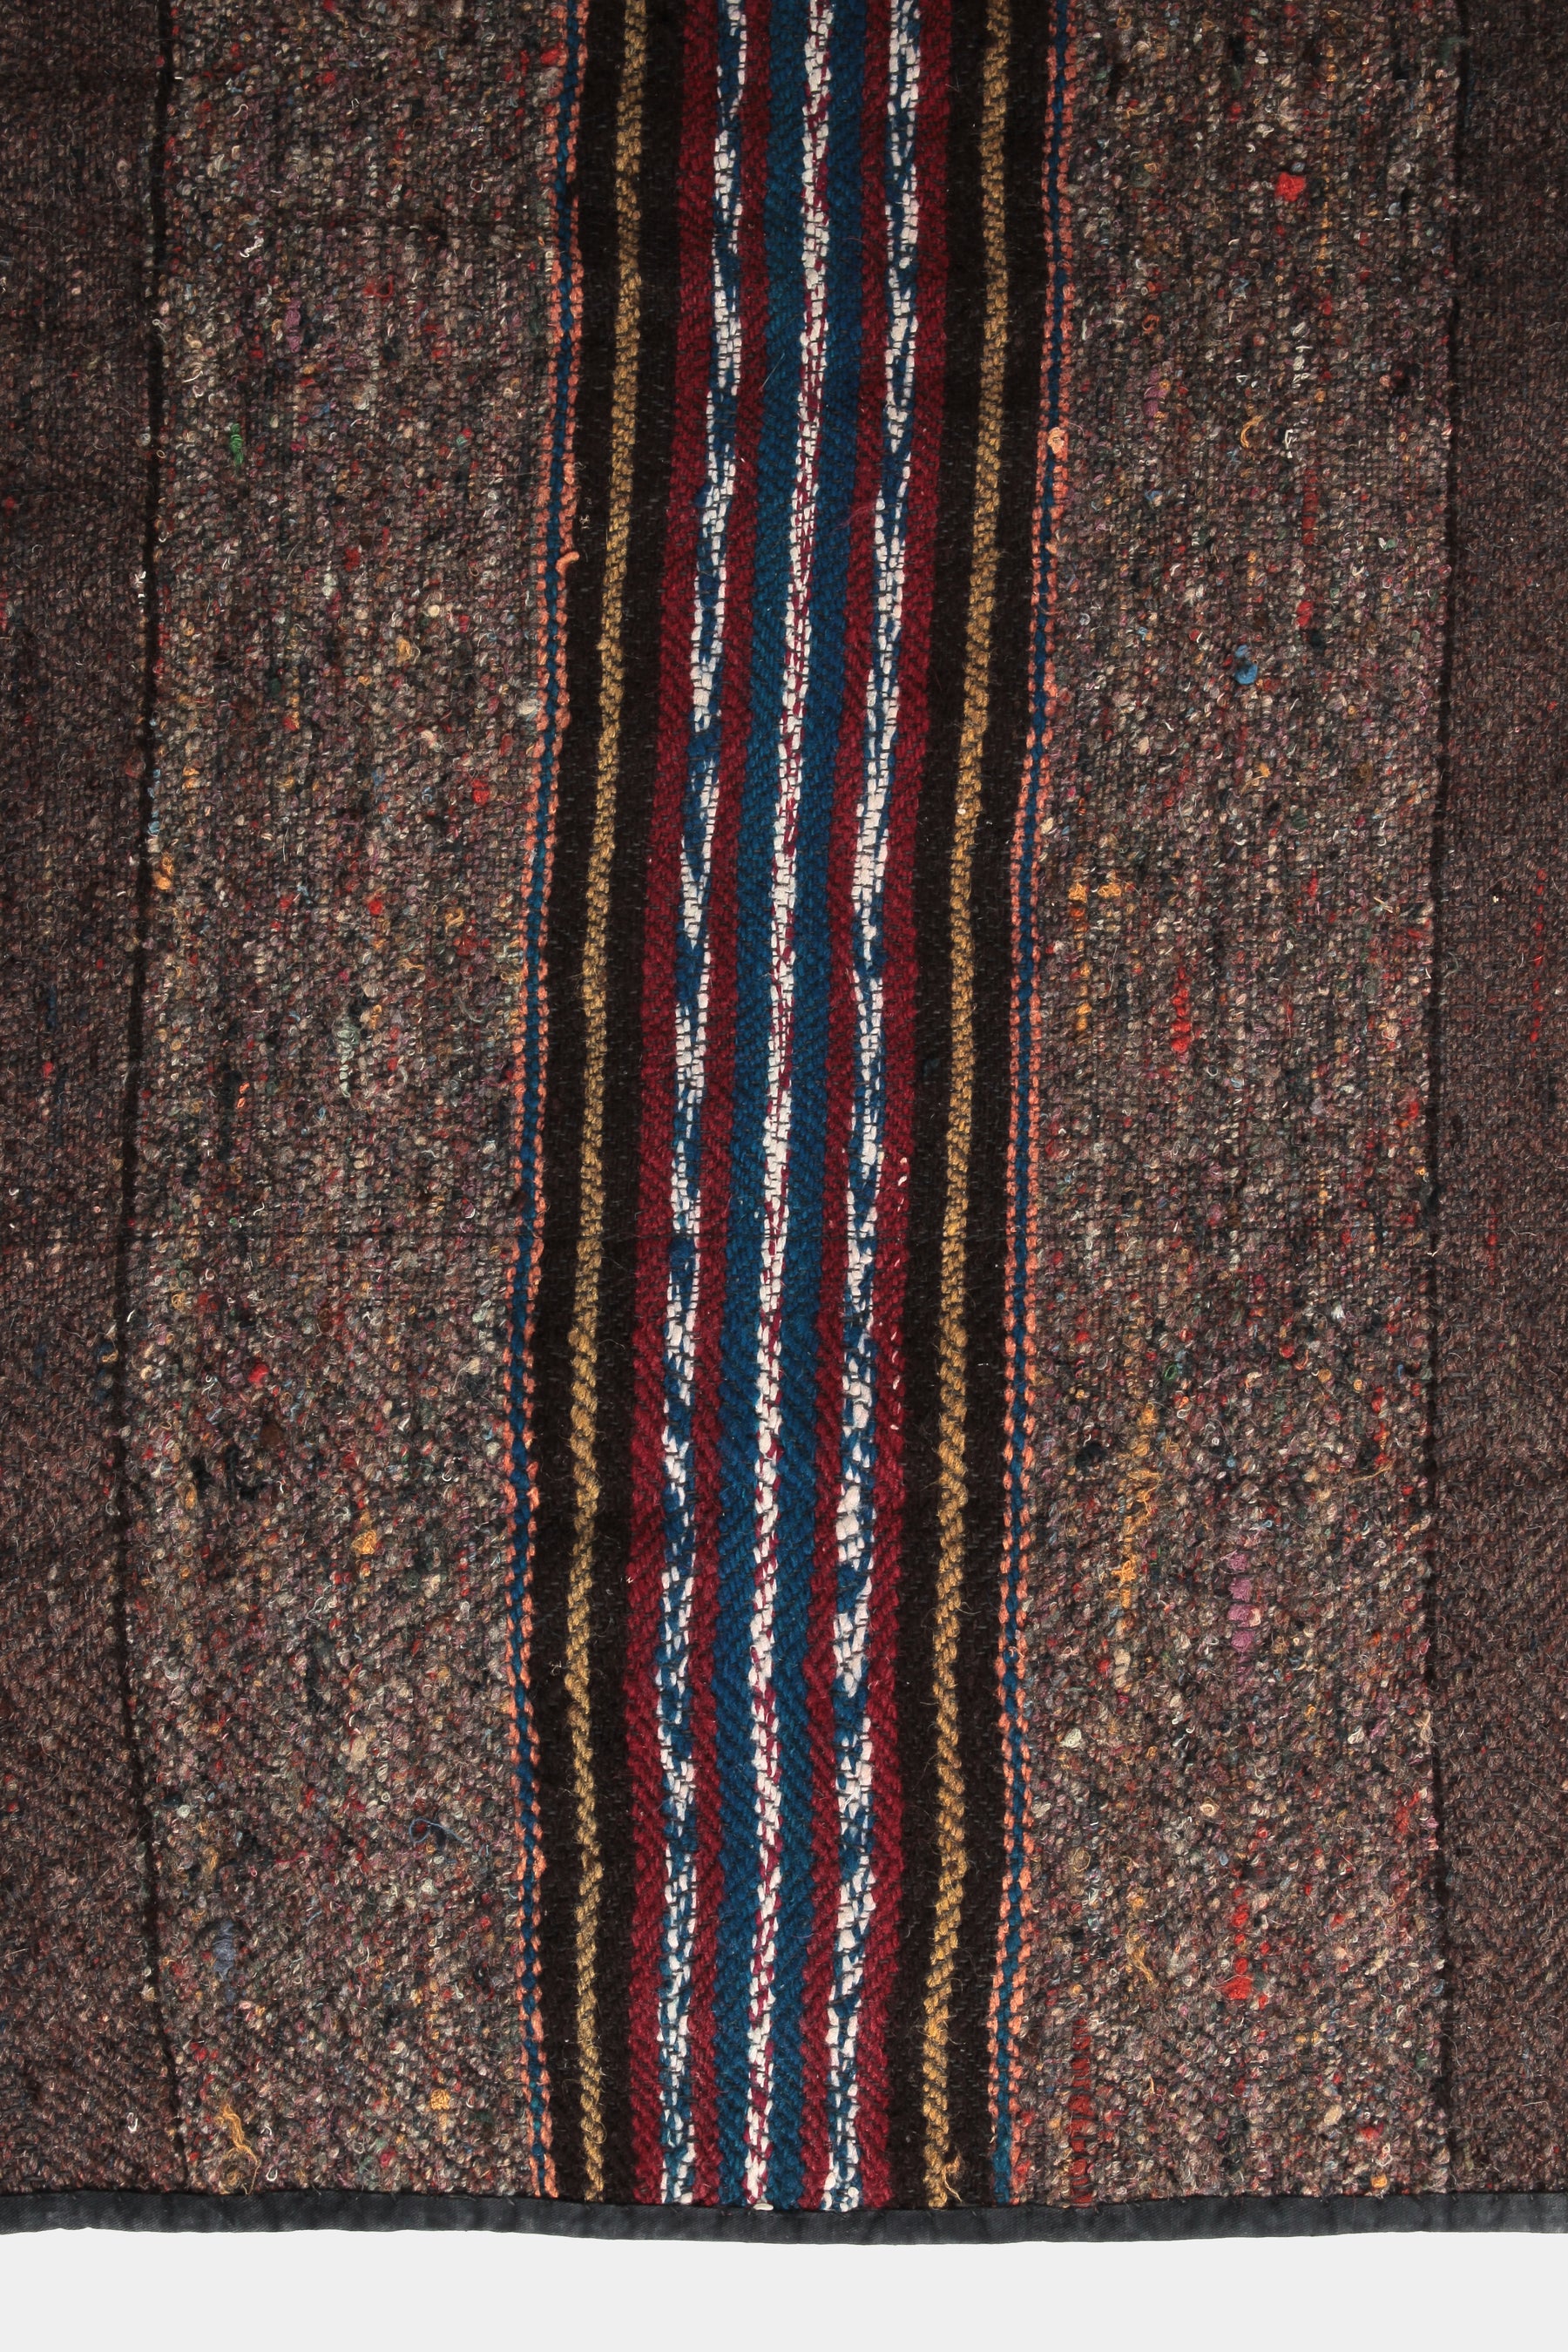 Country House Carpet, Handmade, Bulgaria, 60s